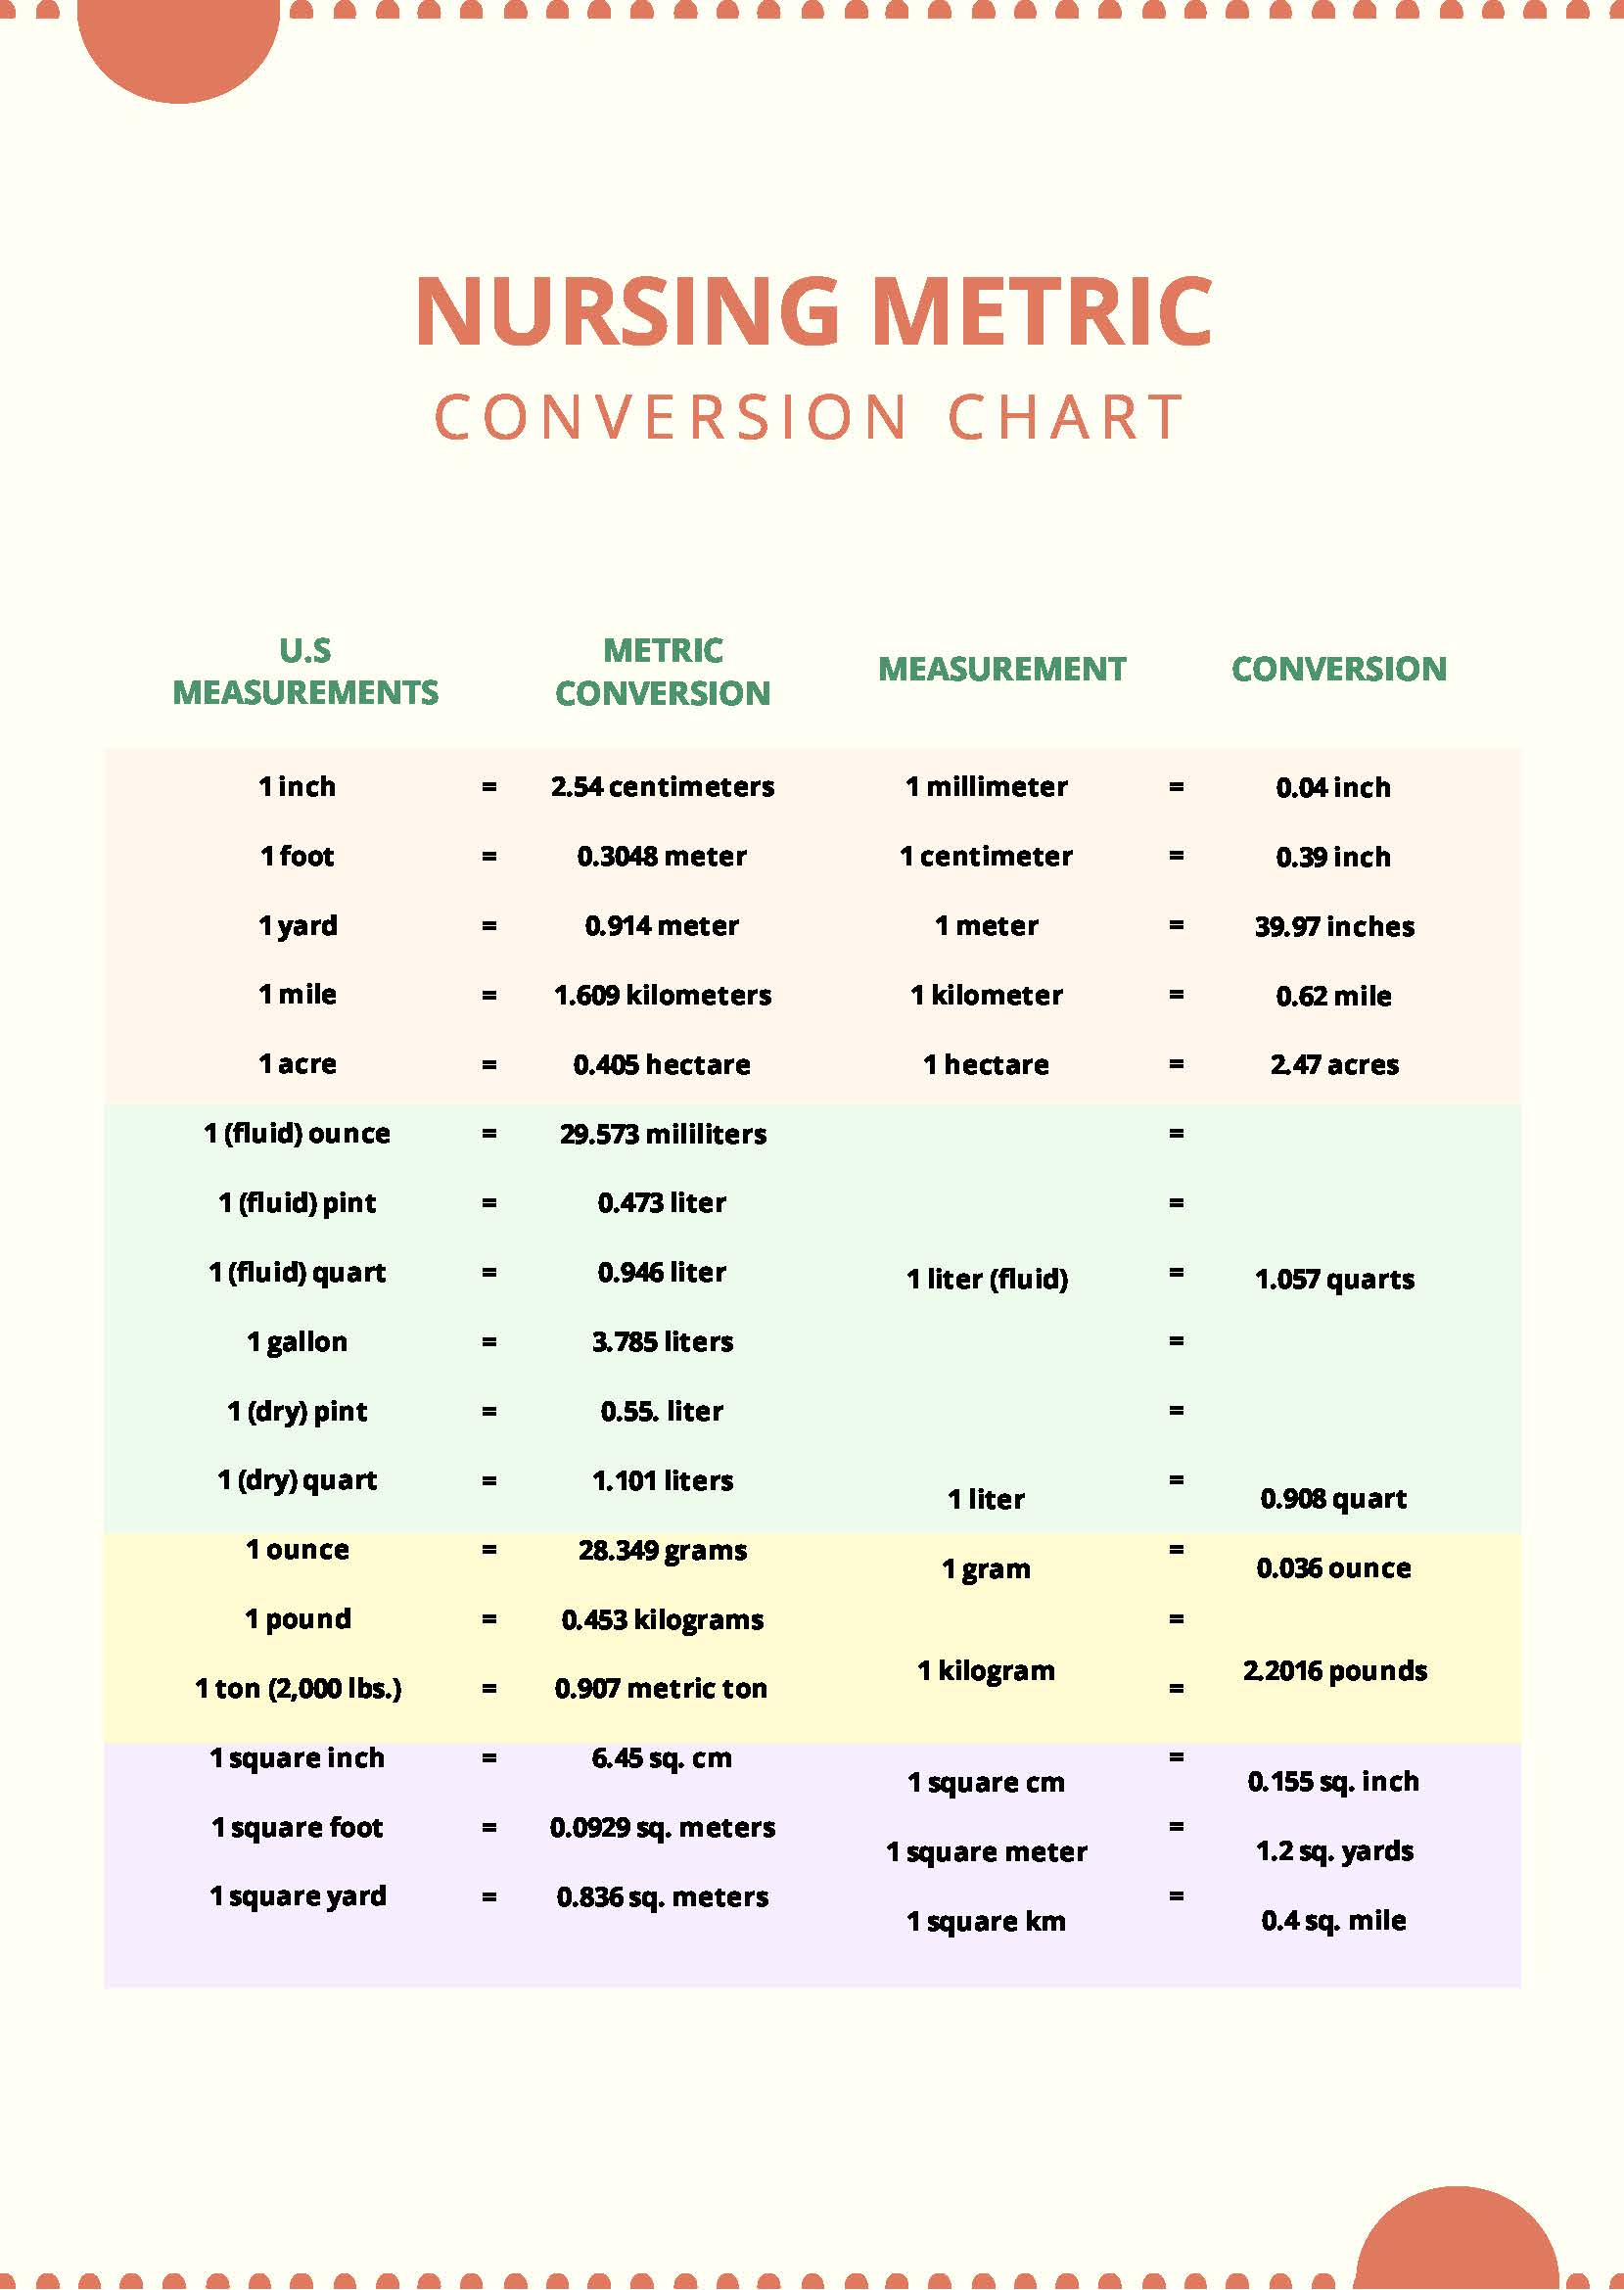 Nursing Metric Conversion Chart